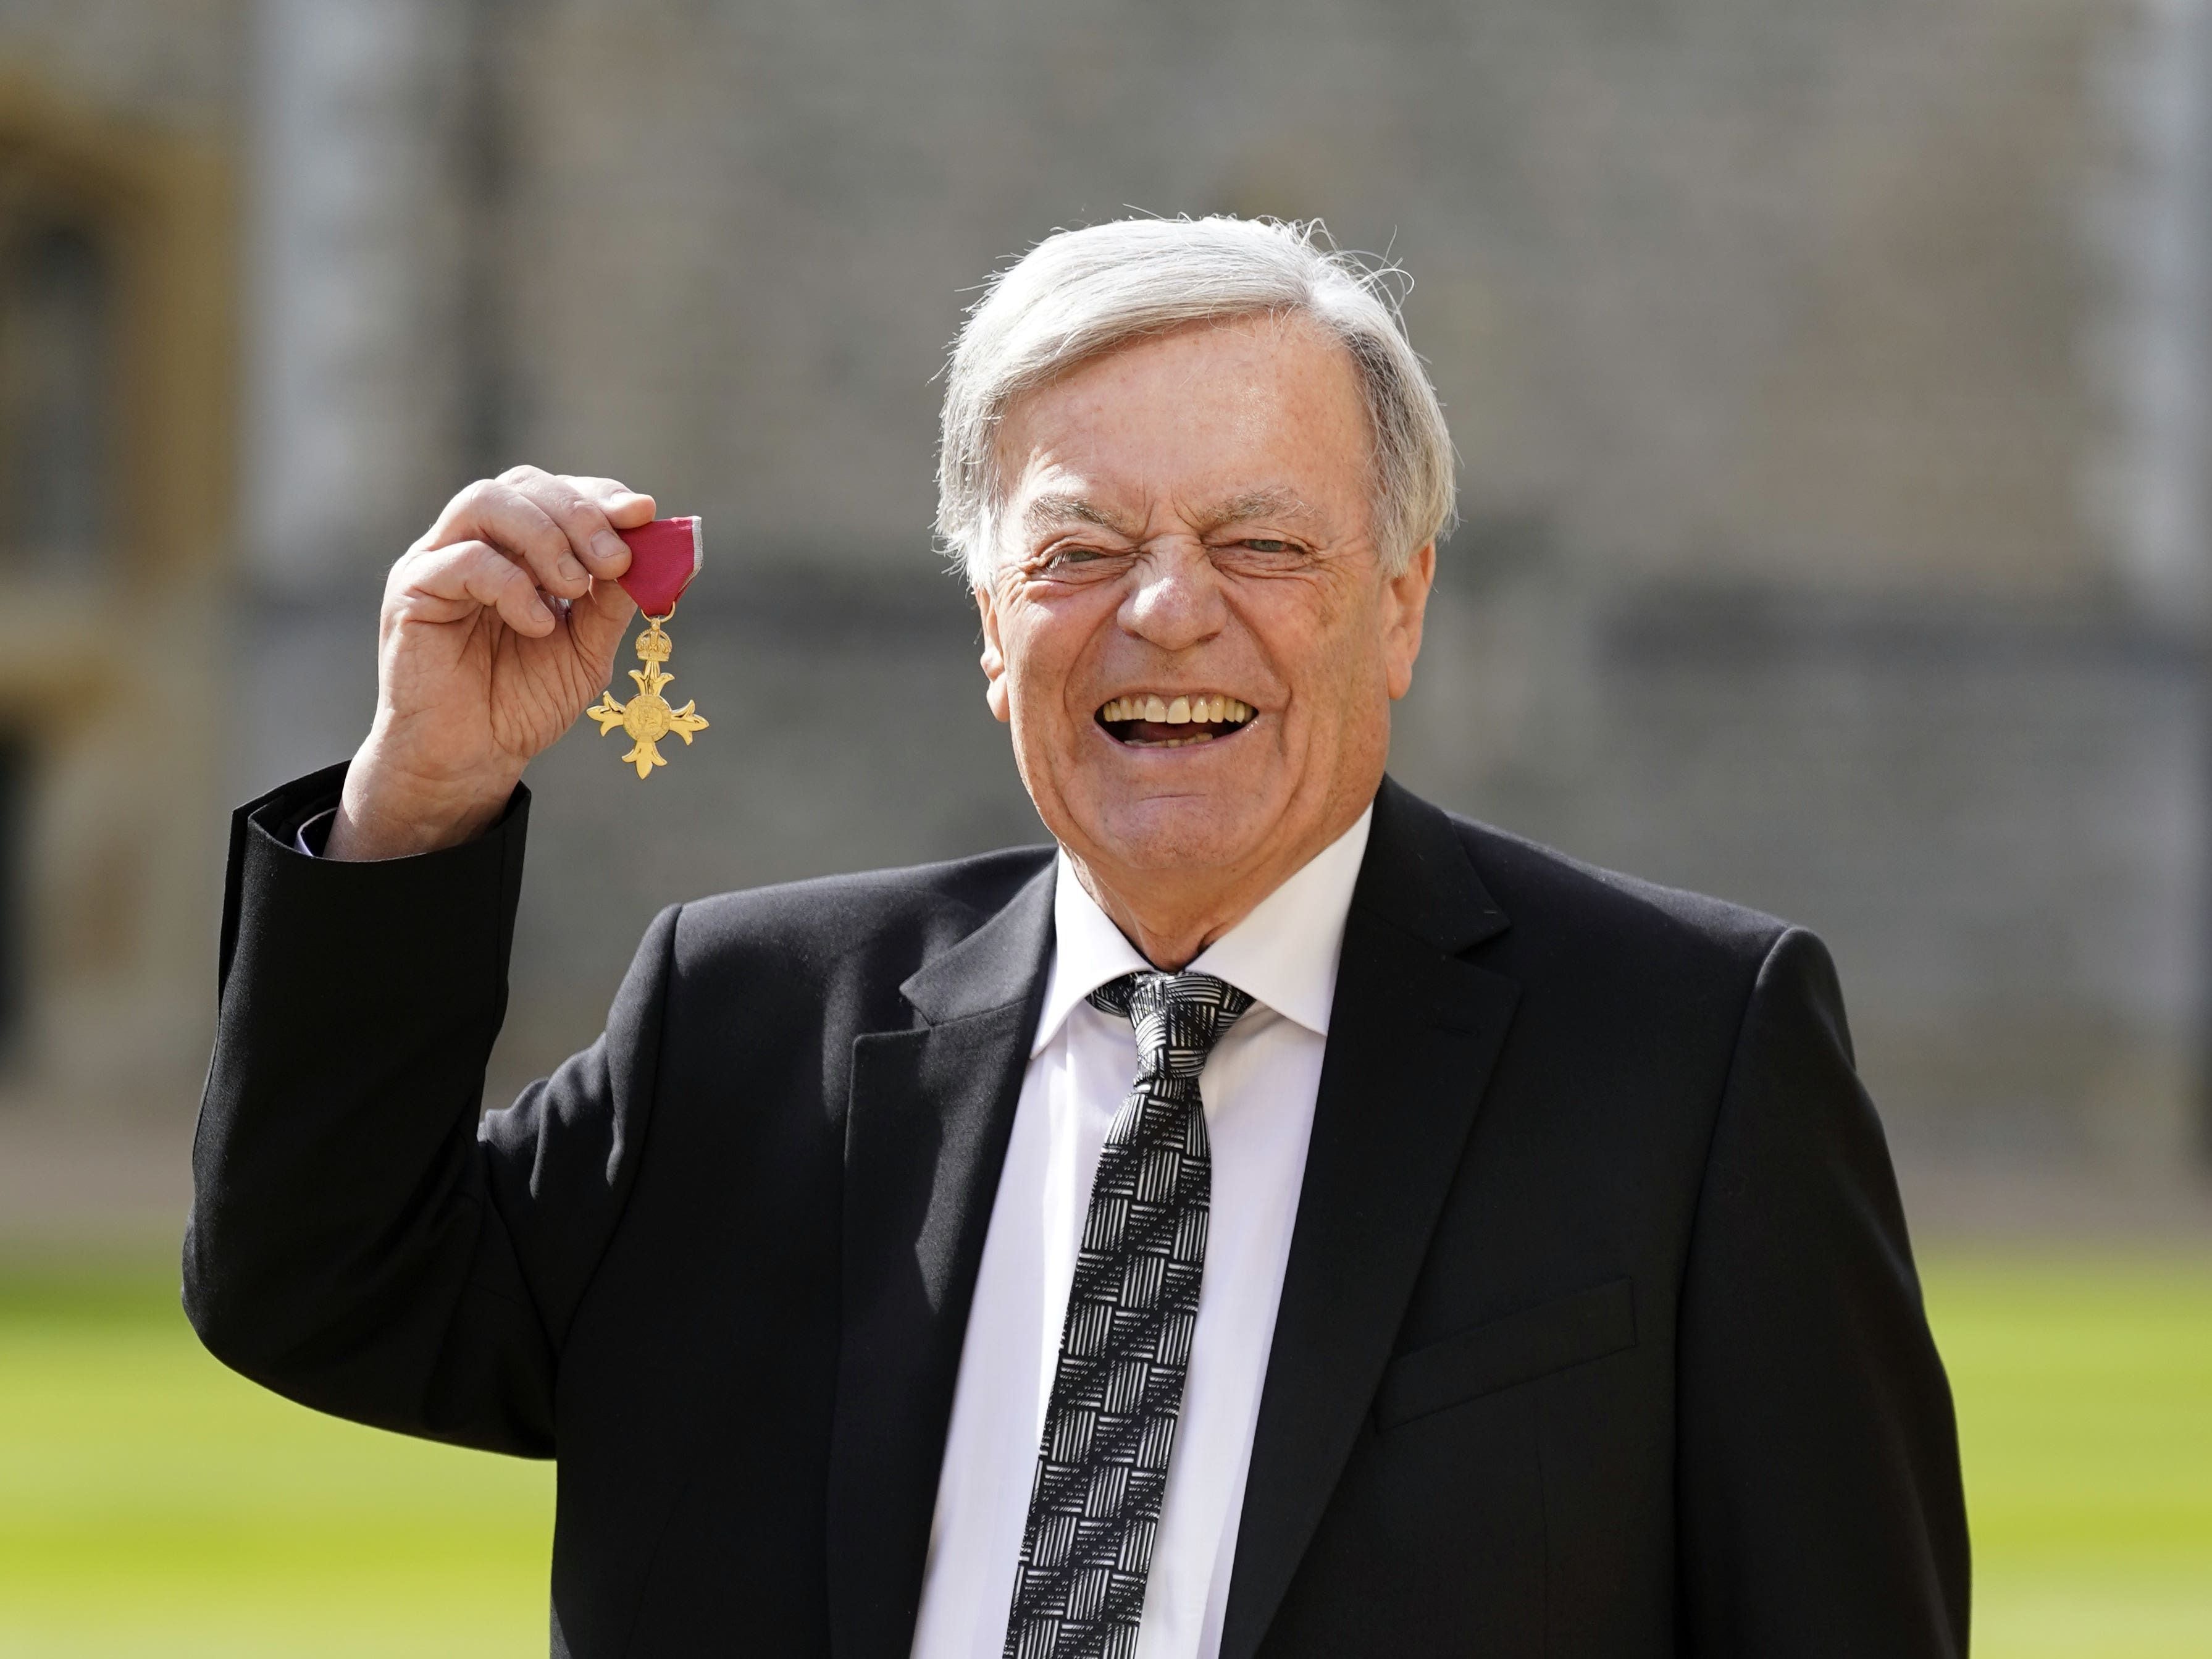 ‘The memories are just wonderful’ – Tony Blackburn celebrates 60 years on air